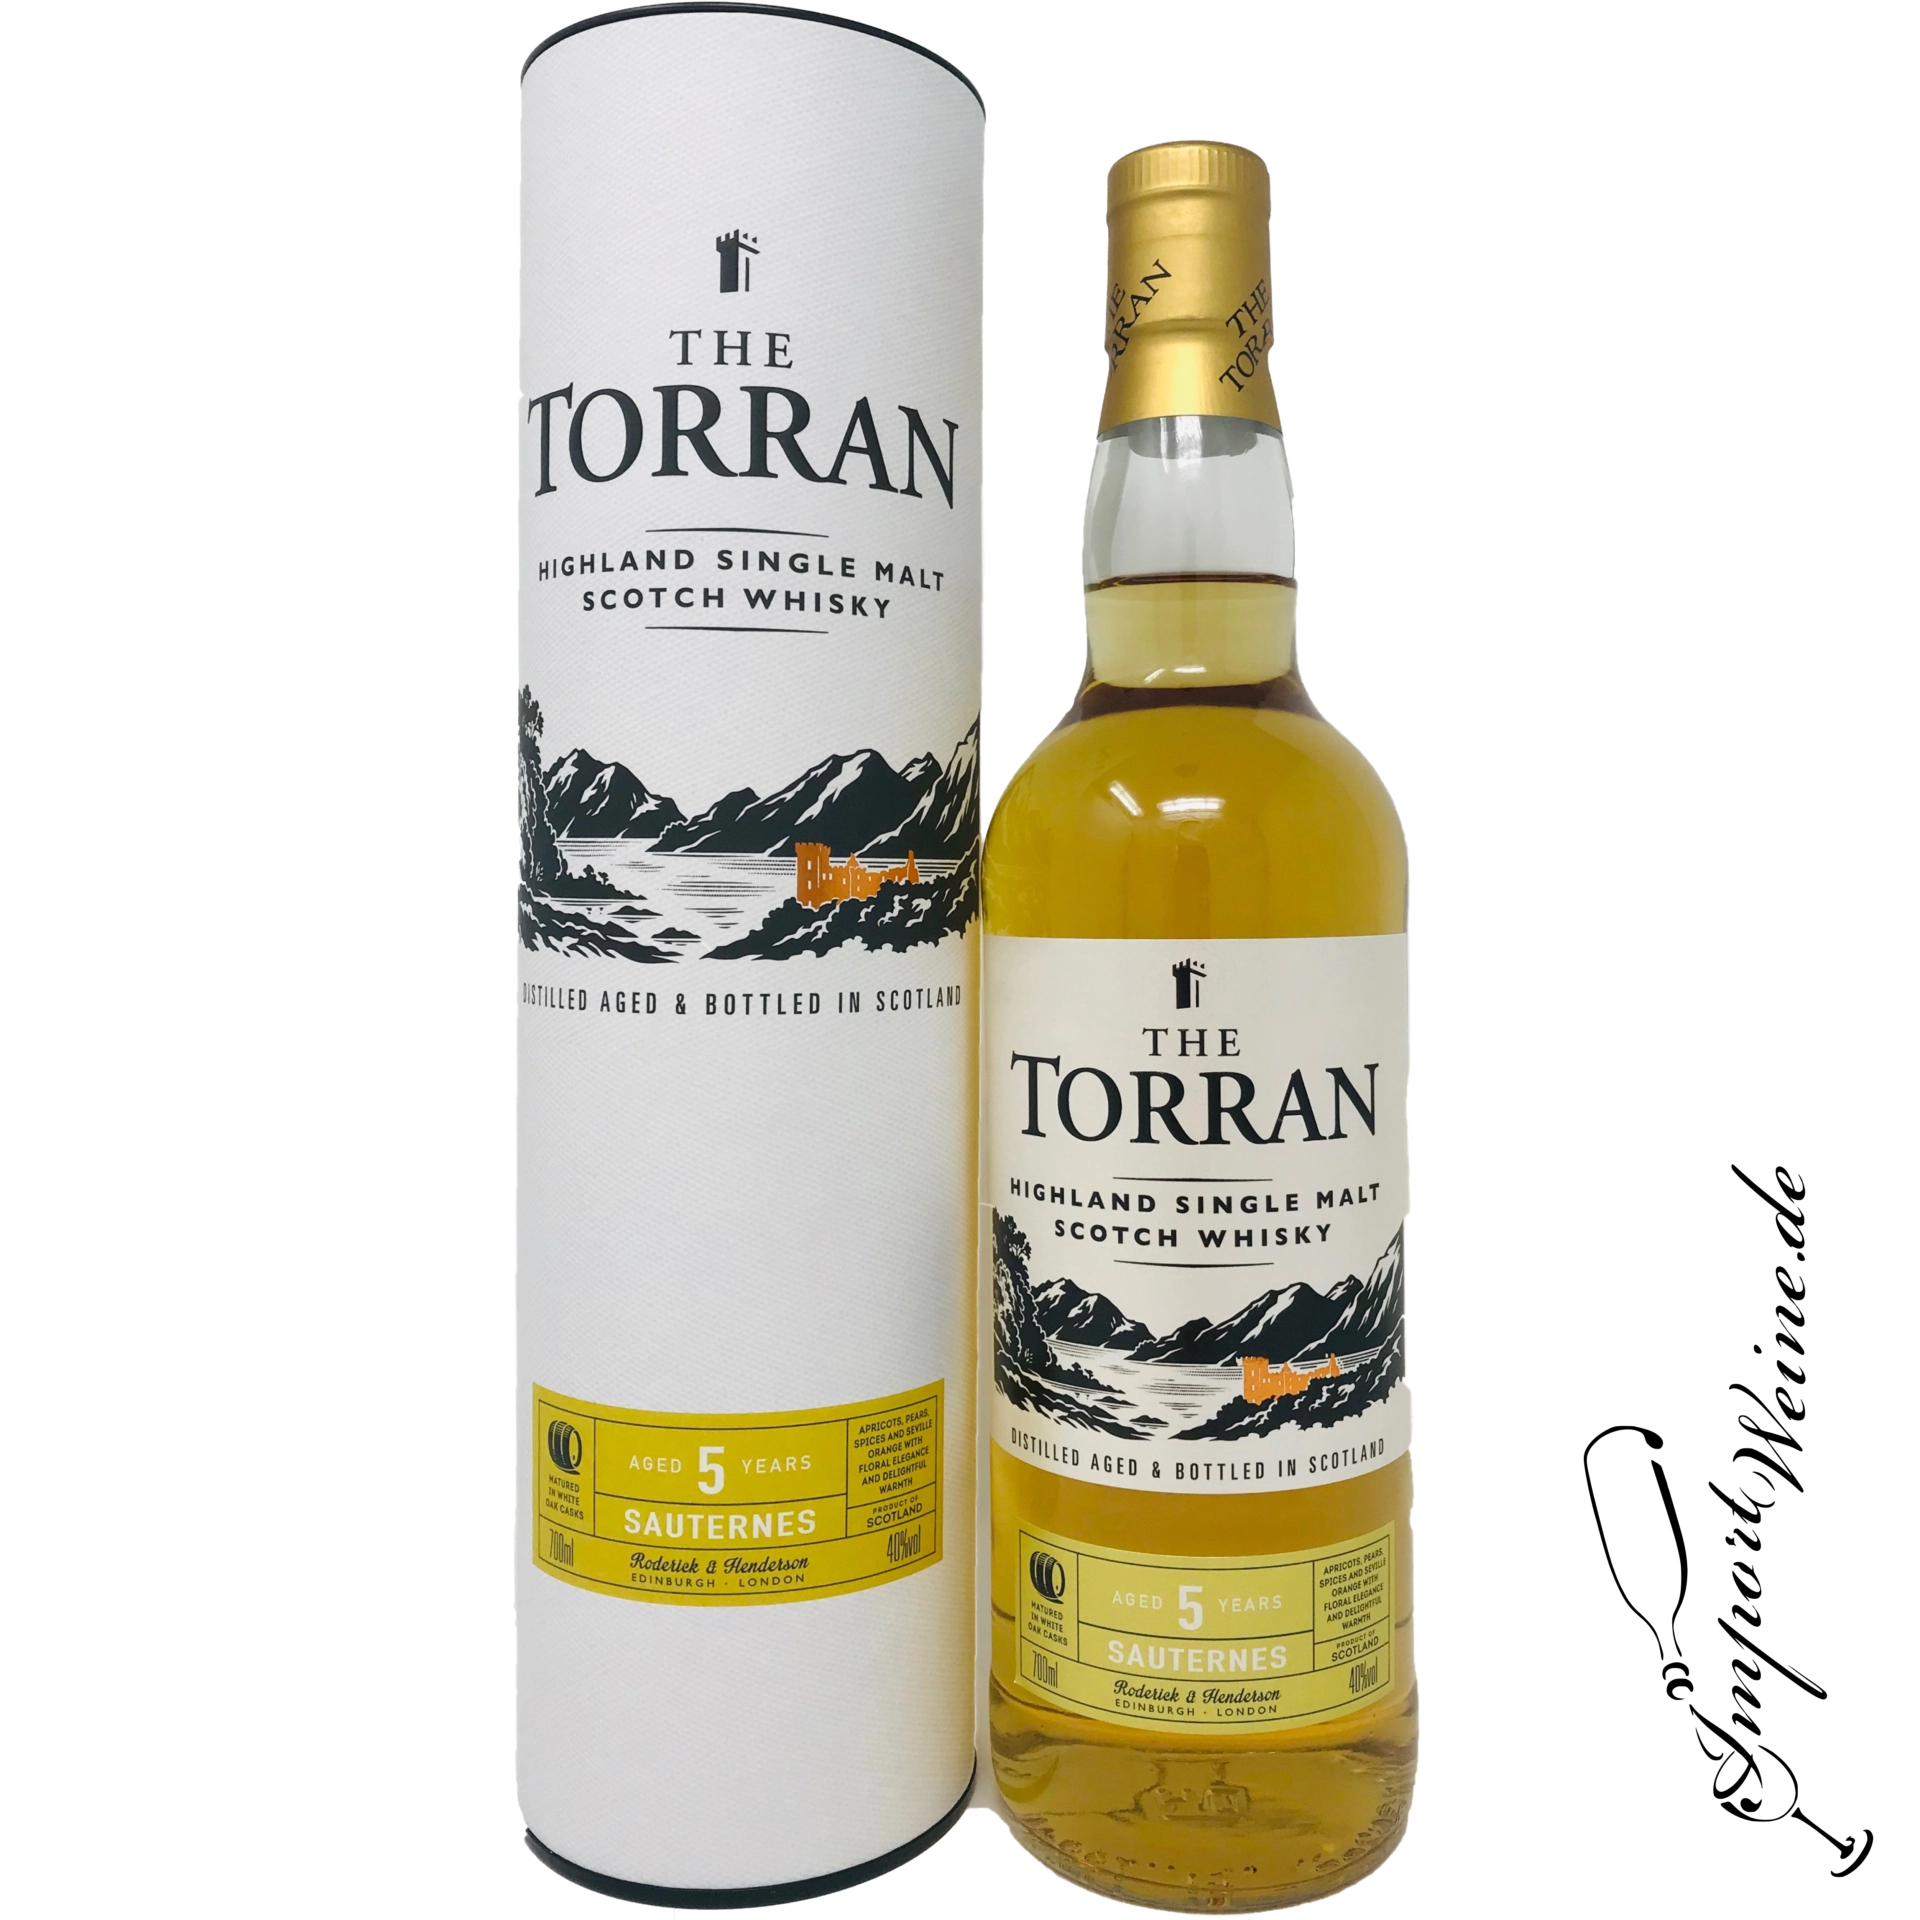 The Torran Highland Single Malt Scotch Whisky Sauternes Finish 5 Years 40%